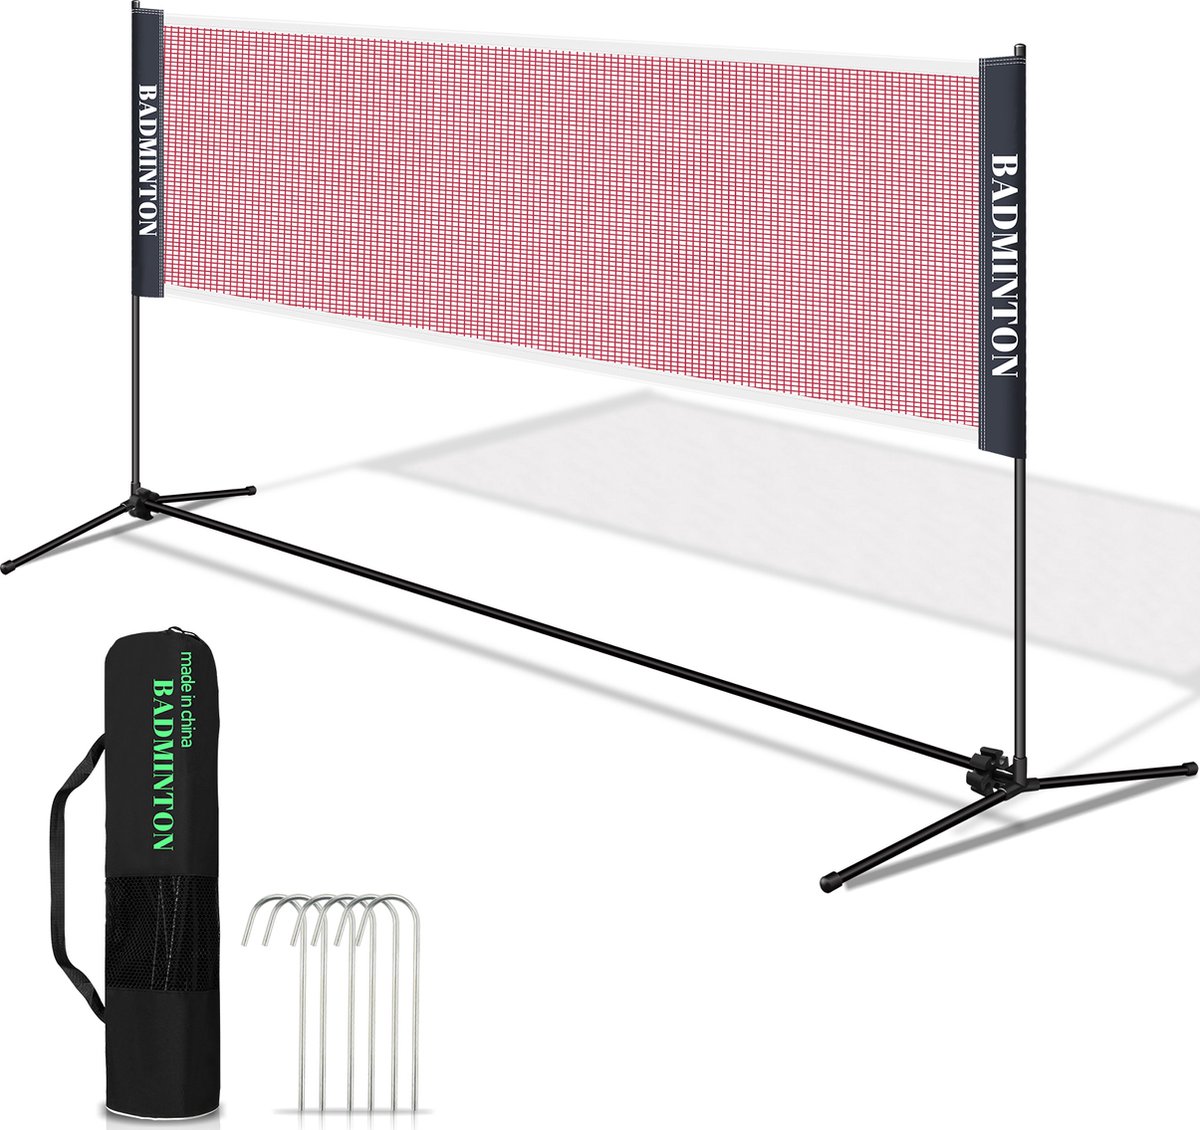 Badmintonnet en Volleybalnet - 410cm - Tennisnet - Multifunctioneel Sport Net - verstelbaar met draagtas - Draagbaar Badminton Net - Merkloos